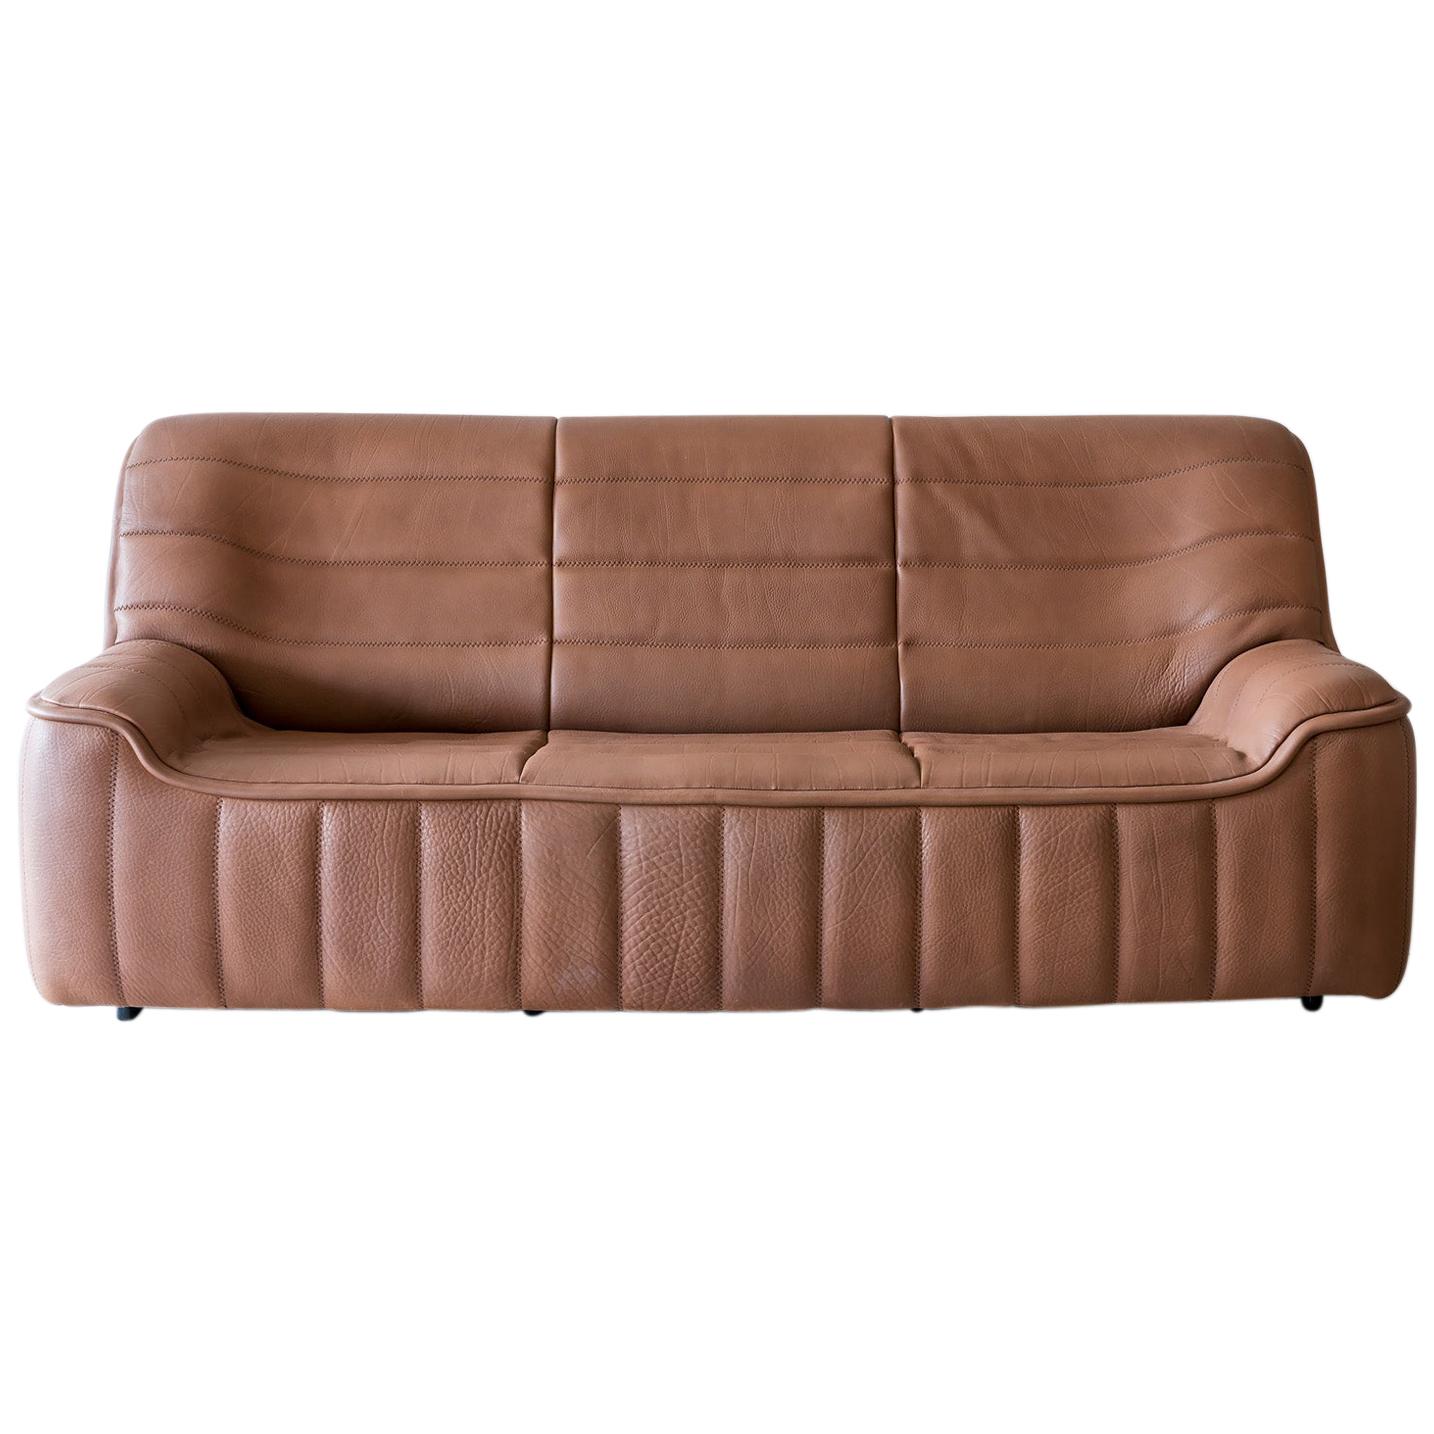 Pristine Original De Sede Model DS84 Sofa in Cognac Buffalo Leather, 1970s